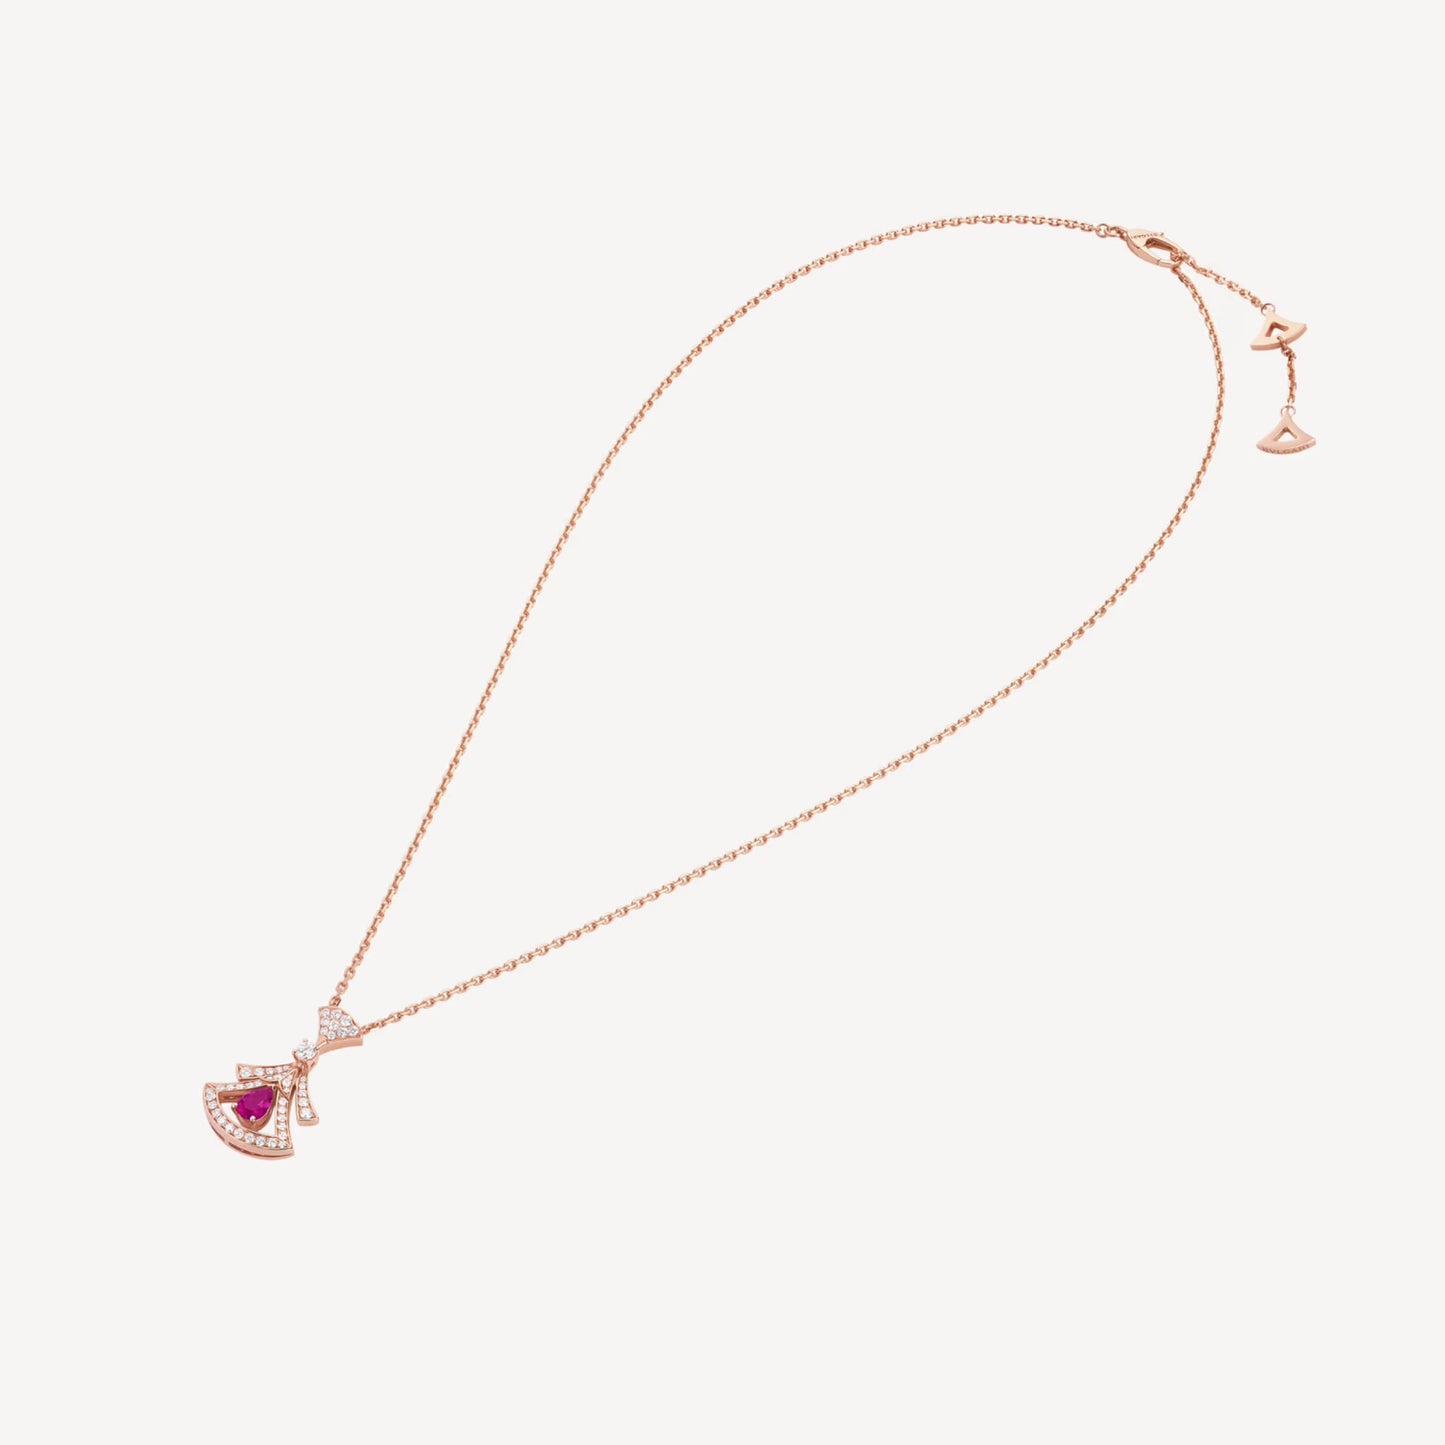 Bulgari Diva’s Dream Necklace “Rose Gold / Ruby / Diamonds”